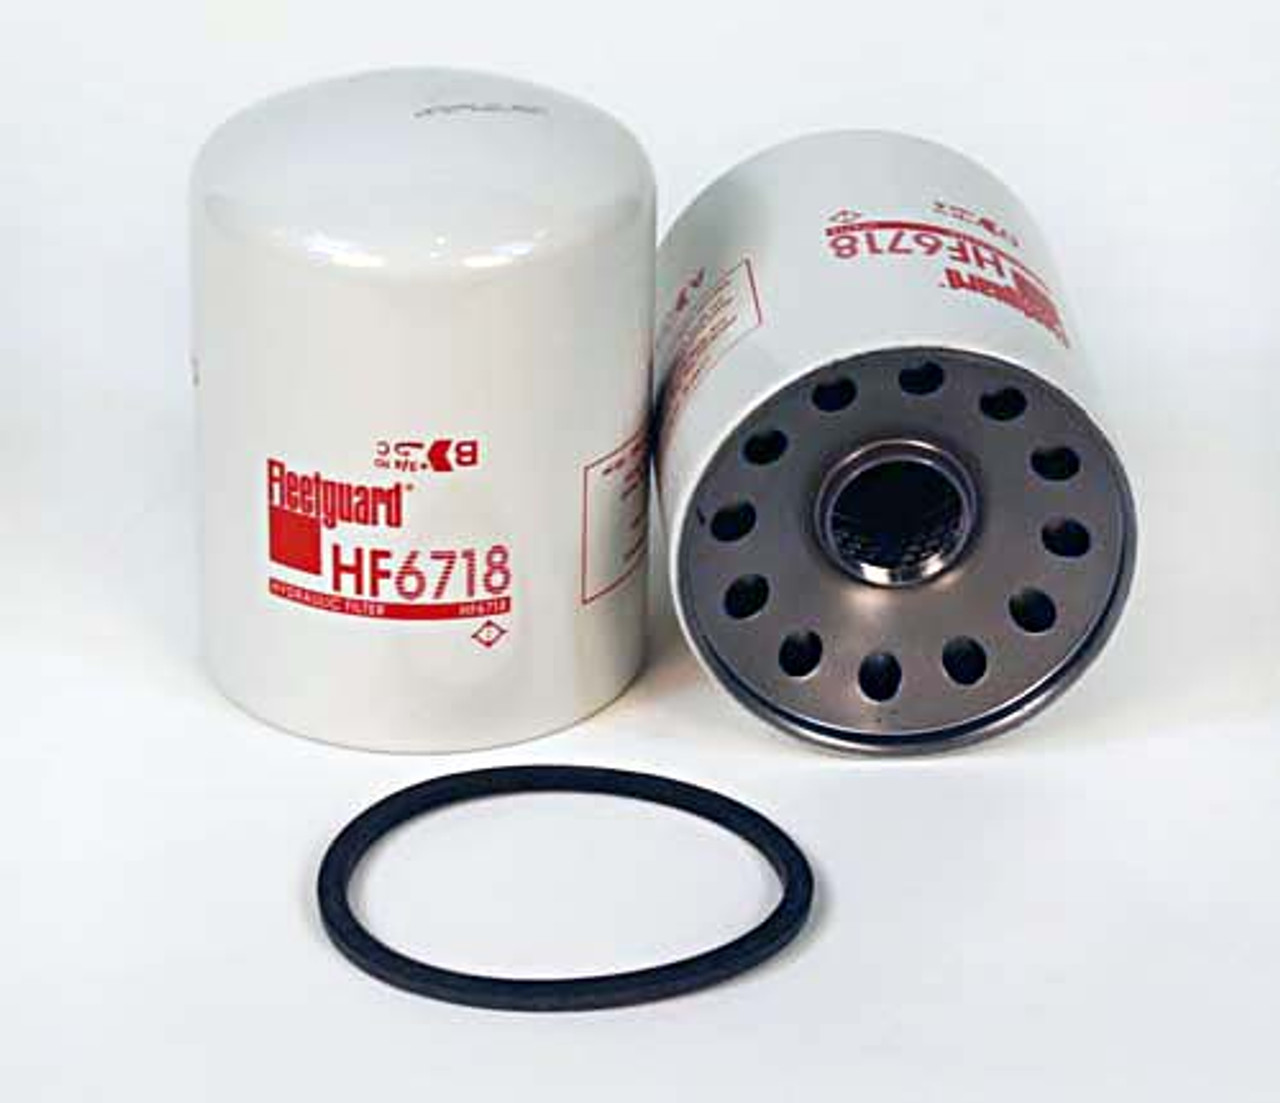 HF6718: Fleetguard Spin-On Hydraulic Filter